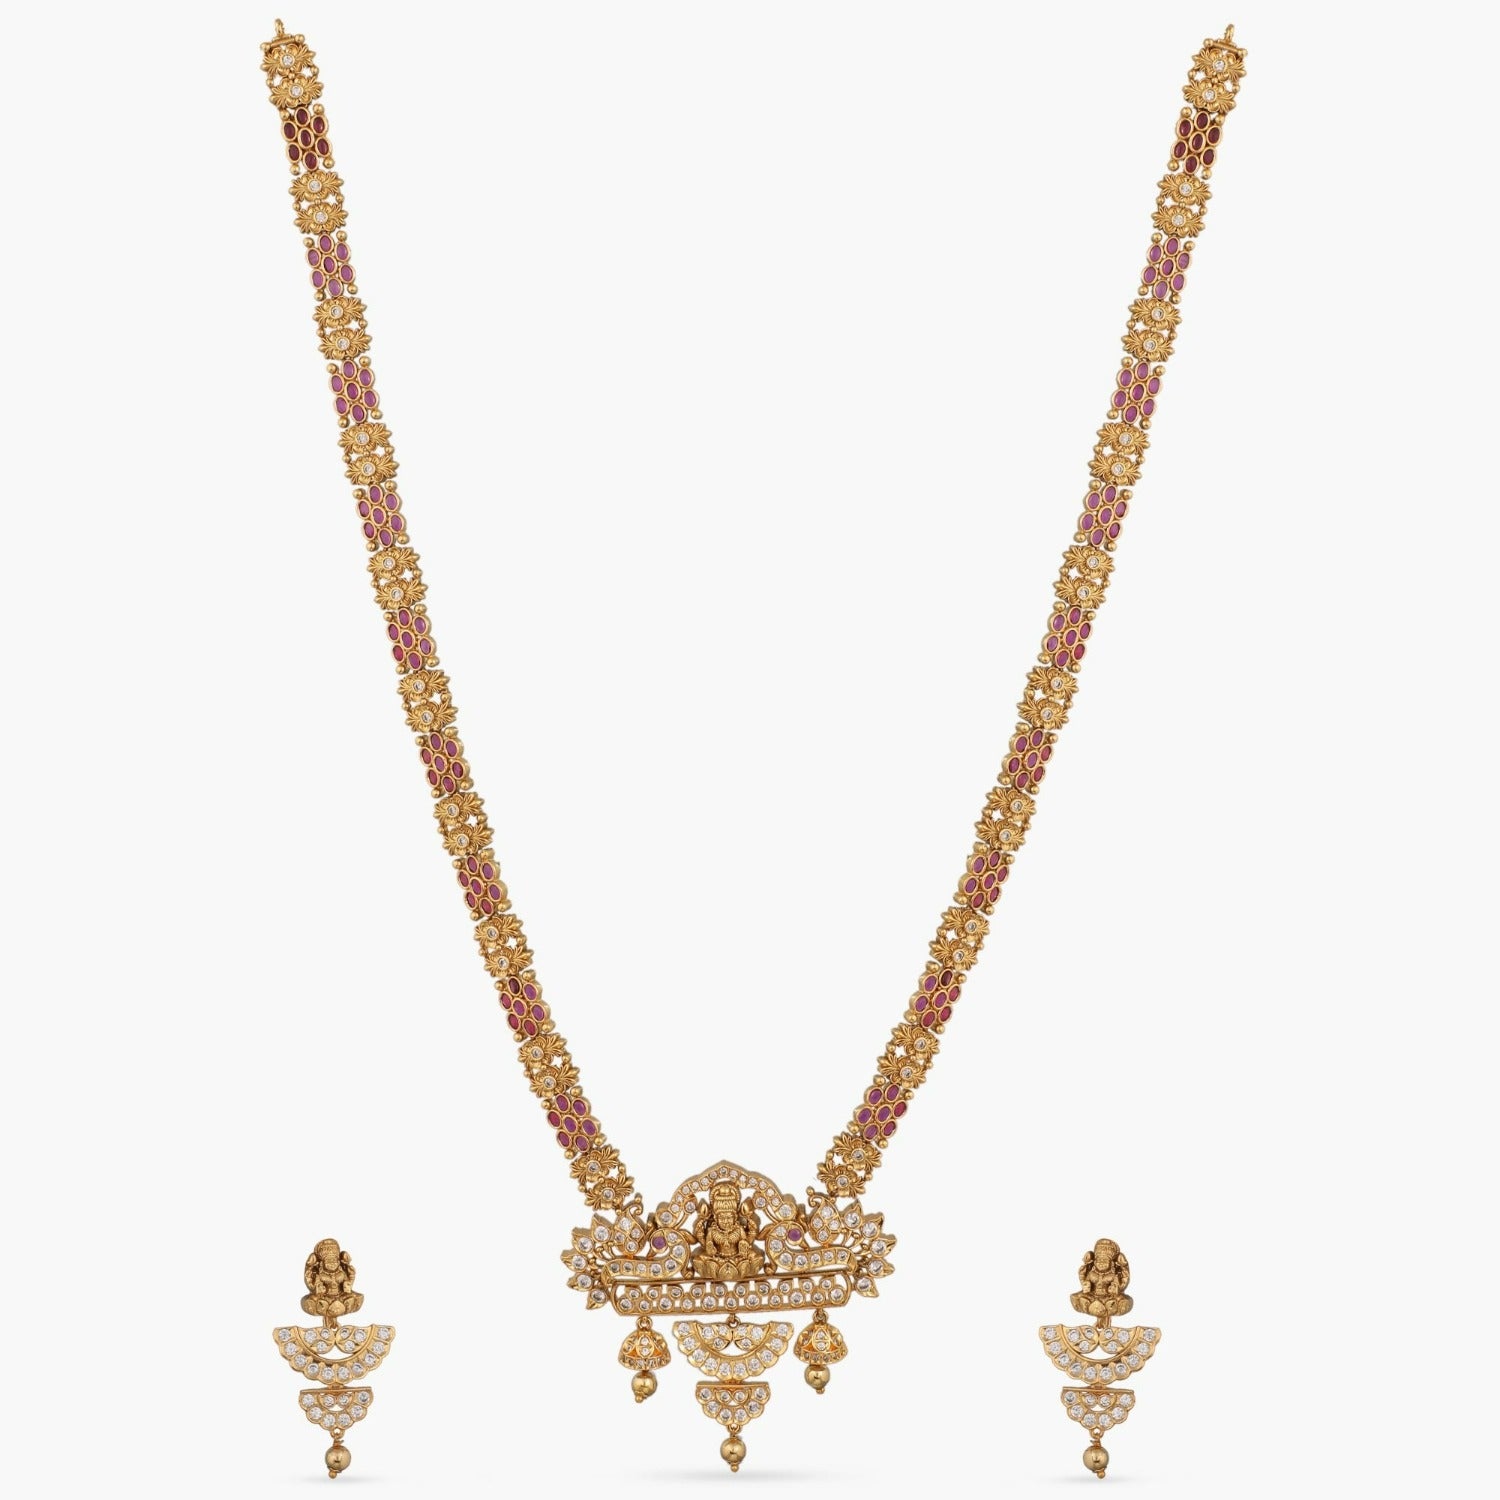 Buy Grandeur Antique Long Necklace Set From Tarinika - Tarinika India